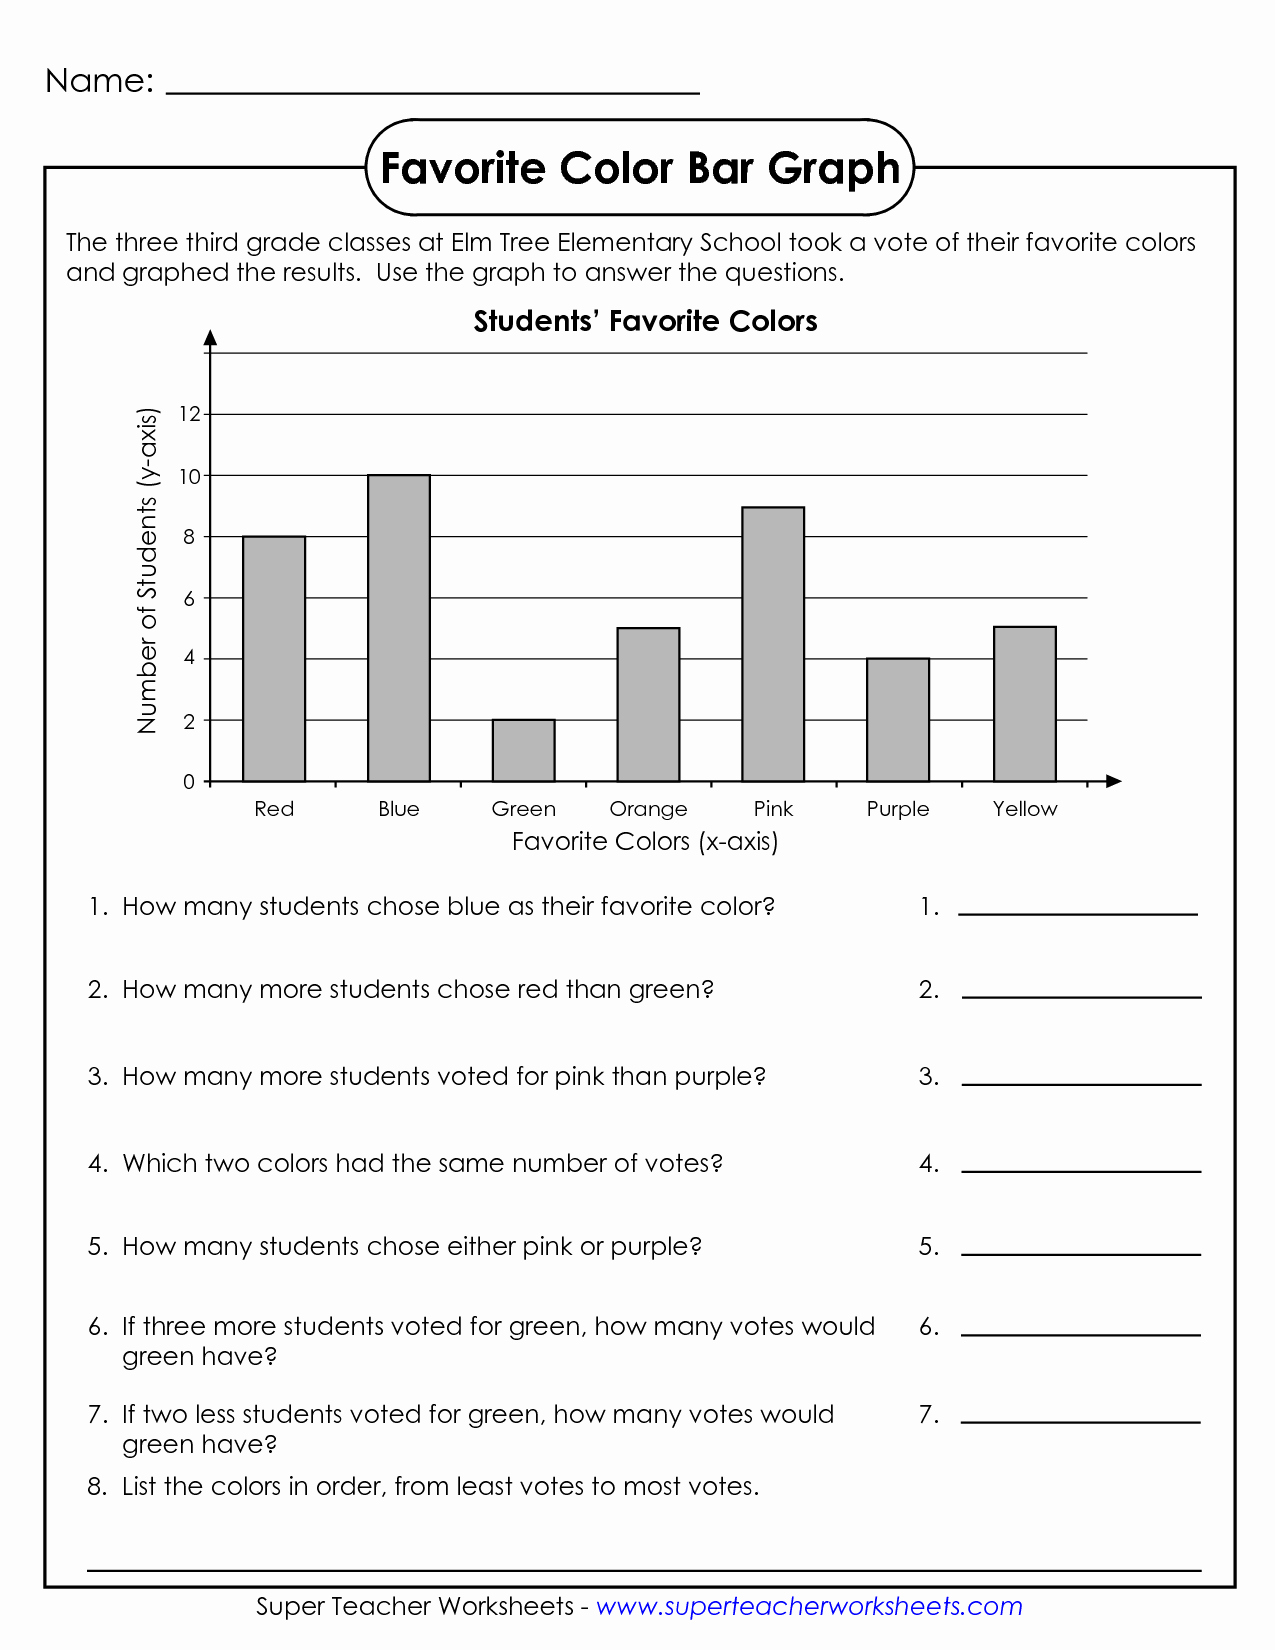 Interpreting Graphs Worksheet High School Fresh 13 Best Of Interpreting Graphs Worksheets